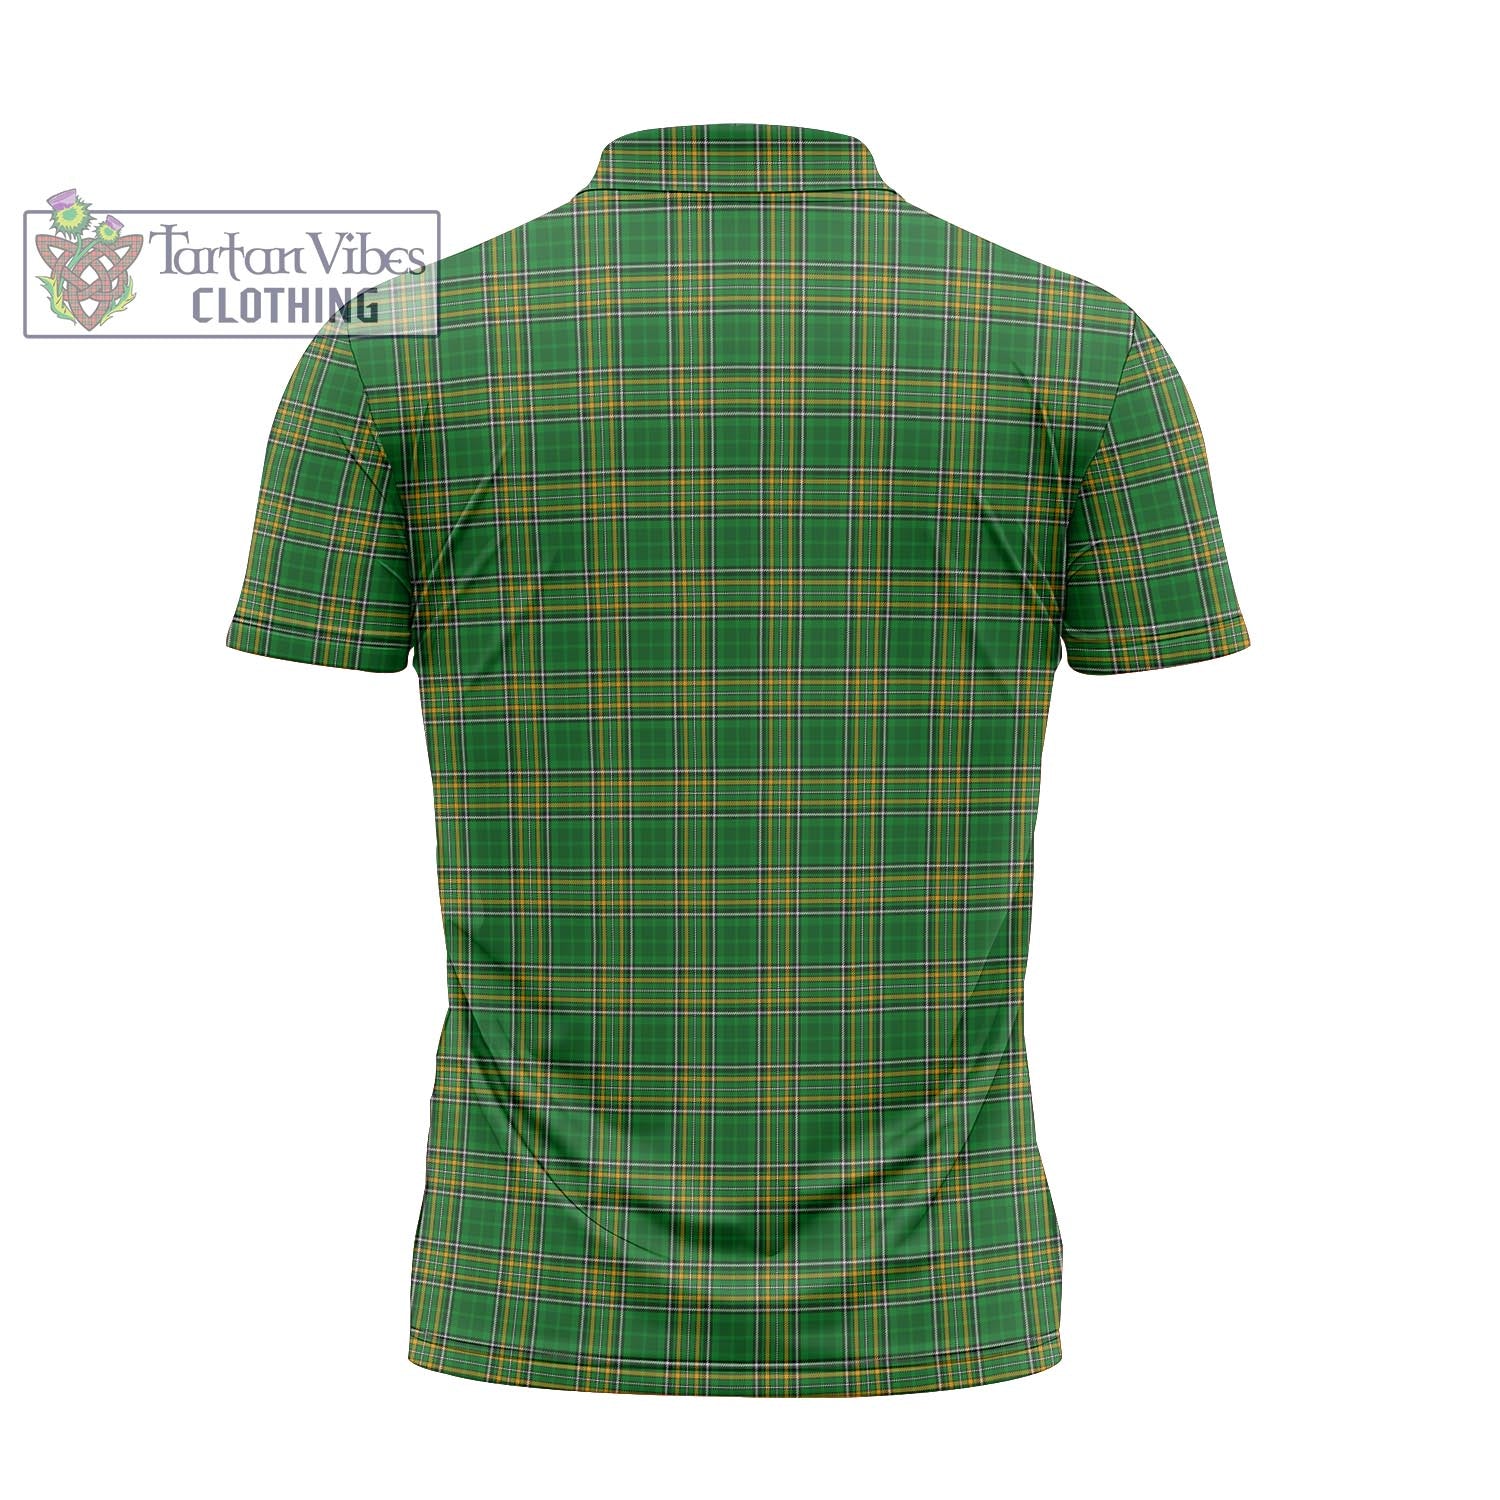 Tartan Vibes Clothing Abbott Ireland Clan Tartan Zipper Polo Shirt with Coat of Arms